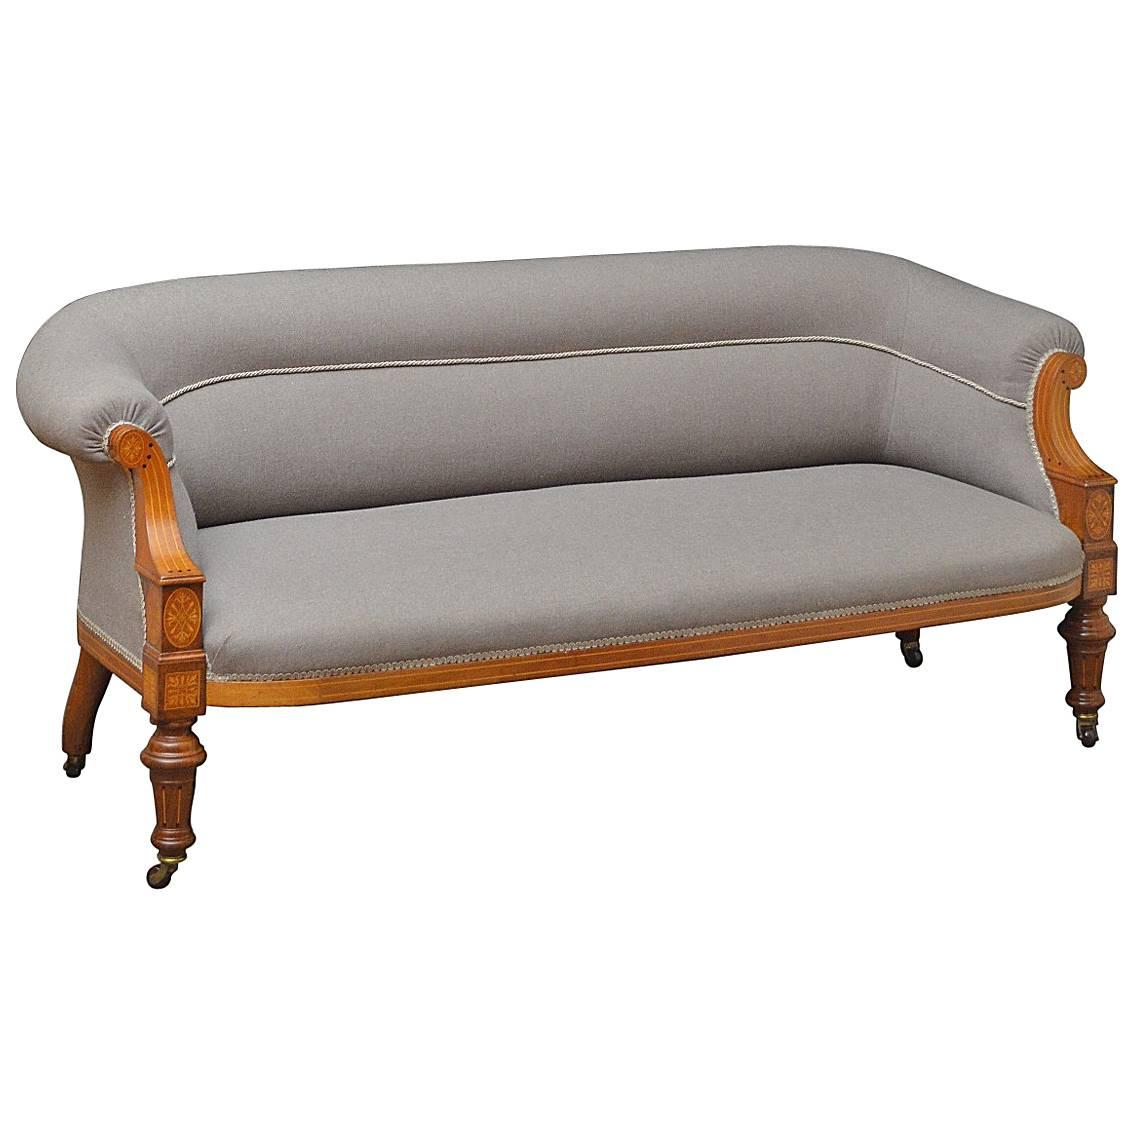 Elegant Victorian Walnut and Inlaid Sofa